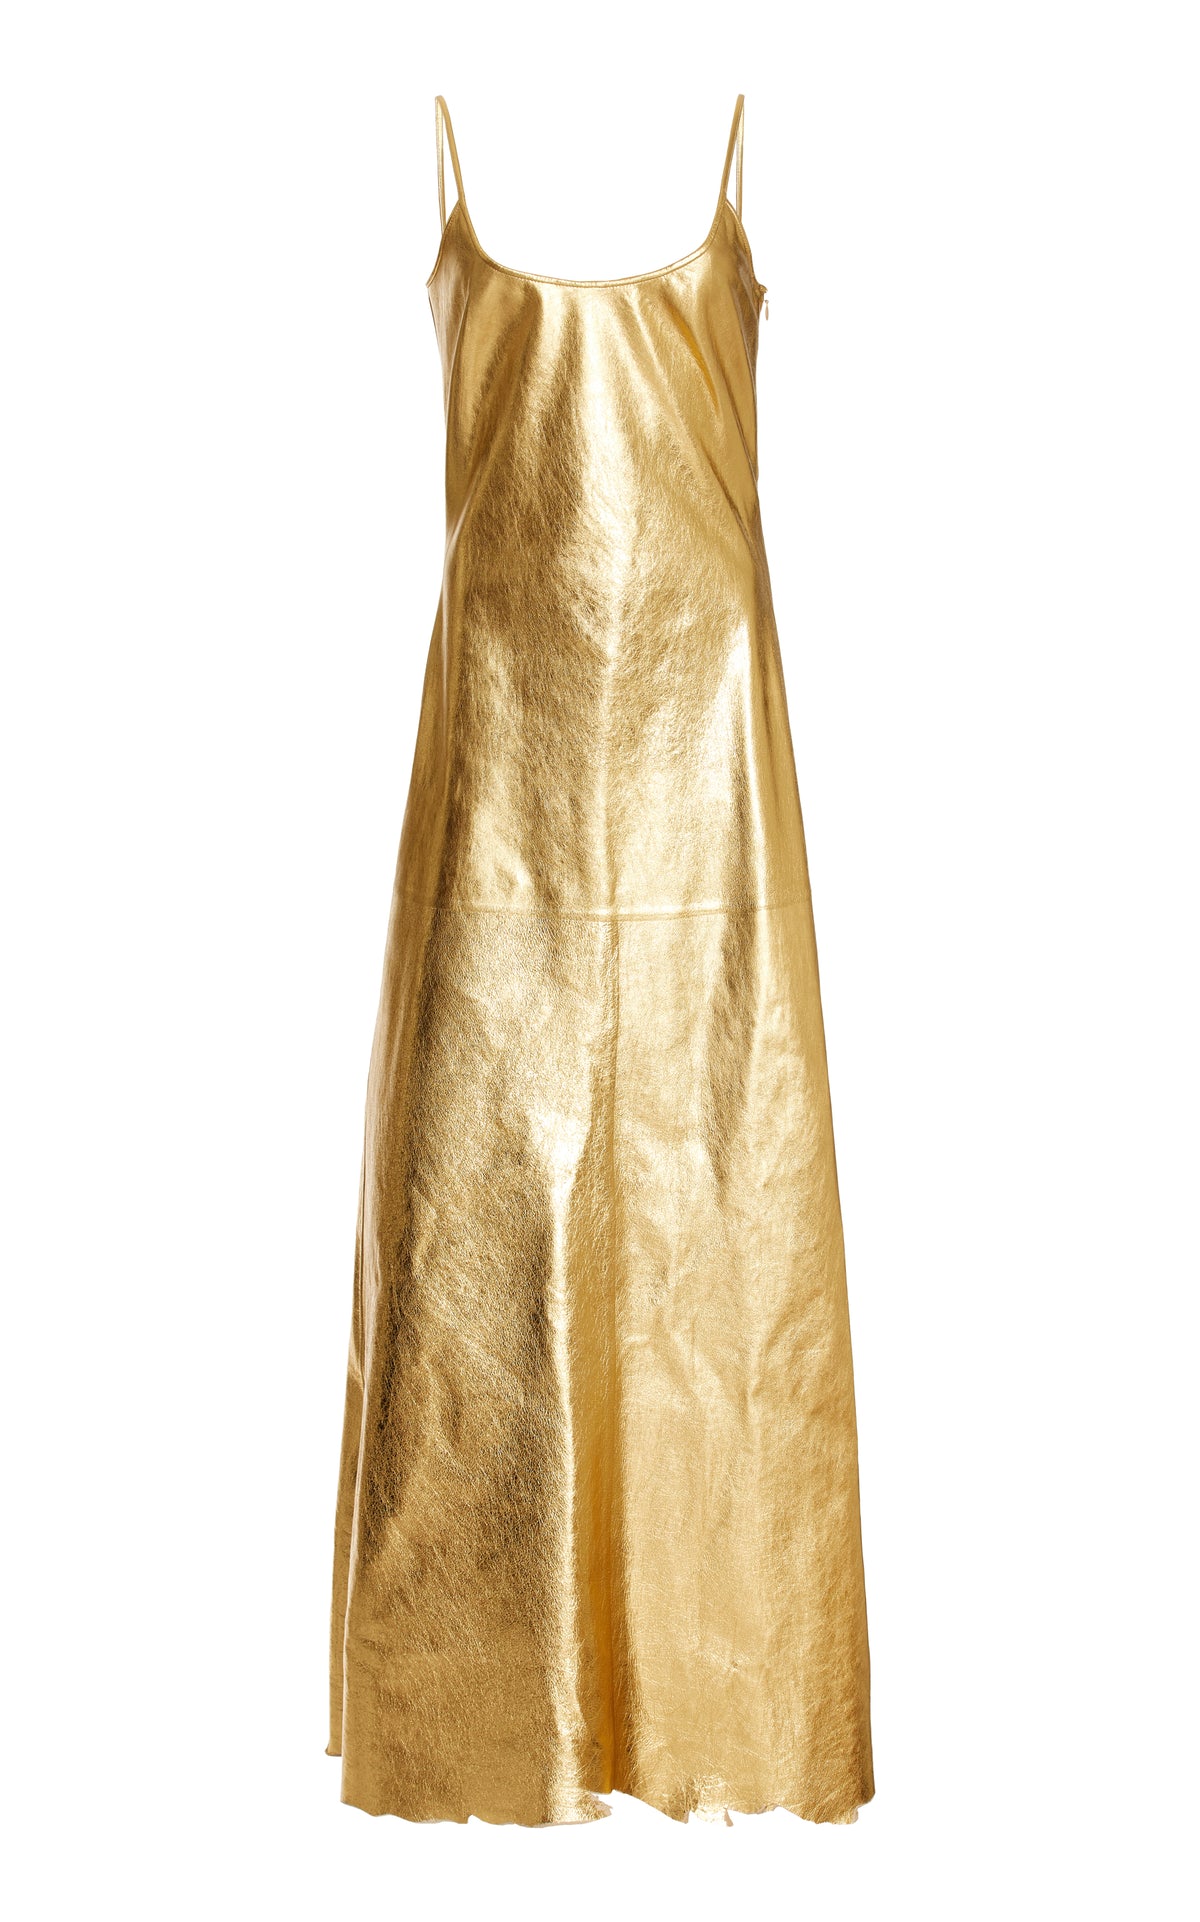 Teles Dress in Gold Metallic Nappa Leather